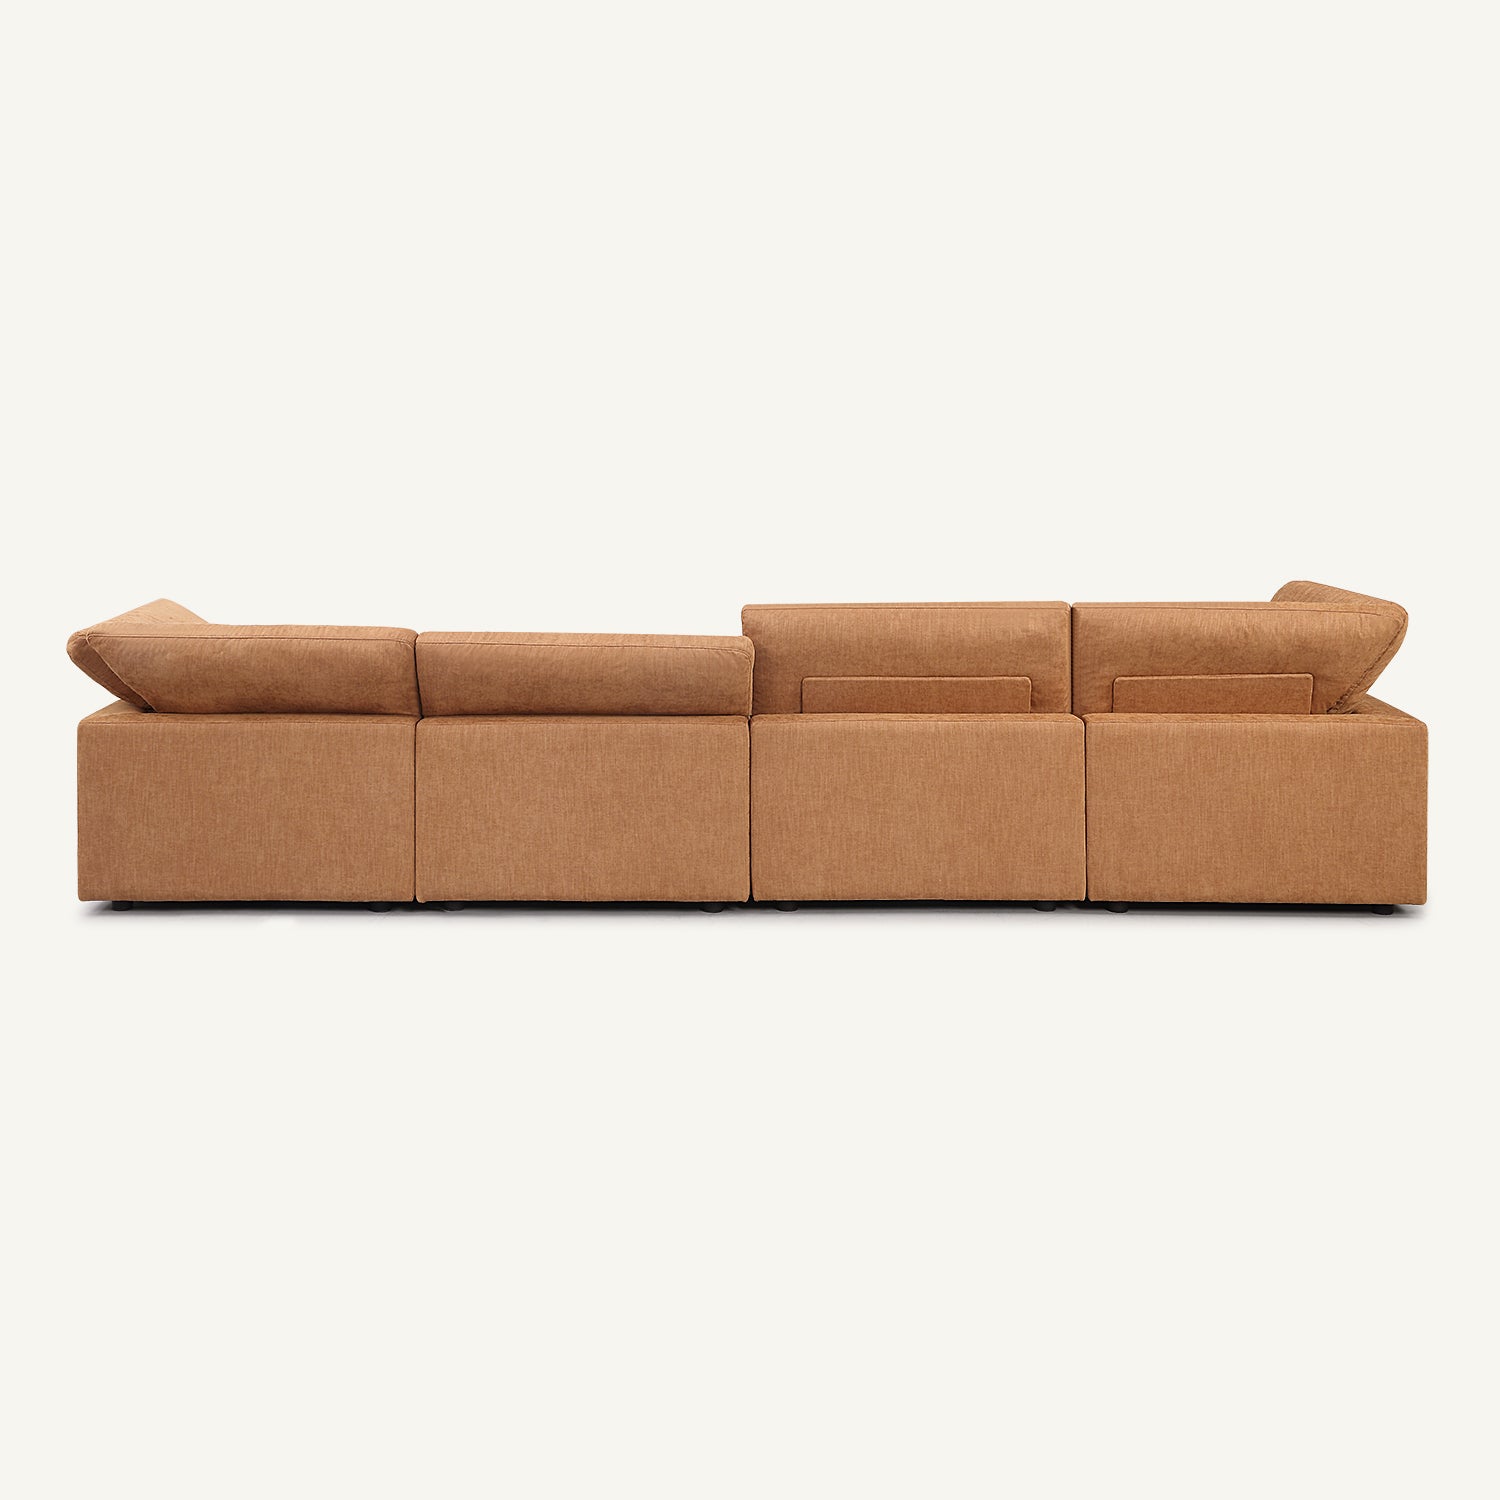 Cloud Tan Linen 5-Seat Sofa with Ottoman